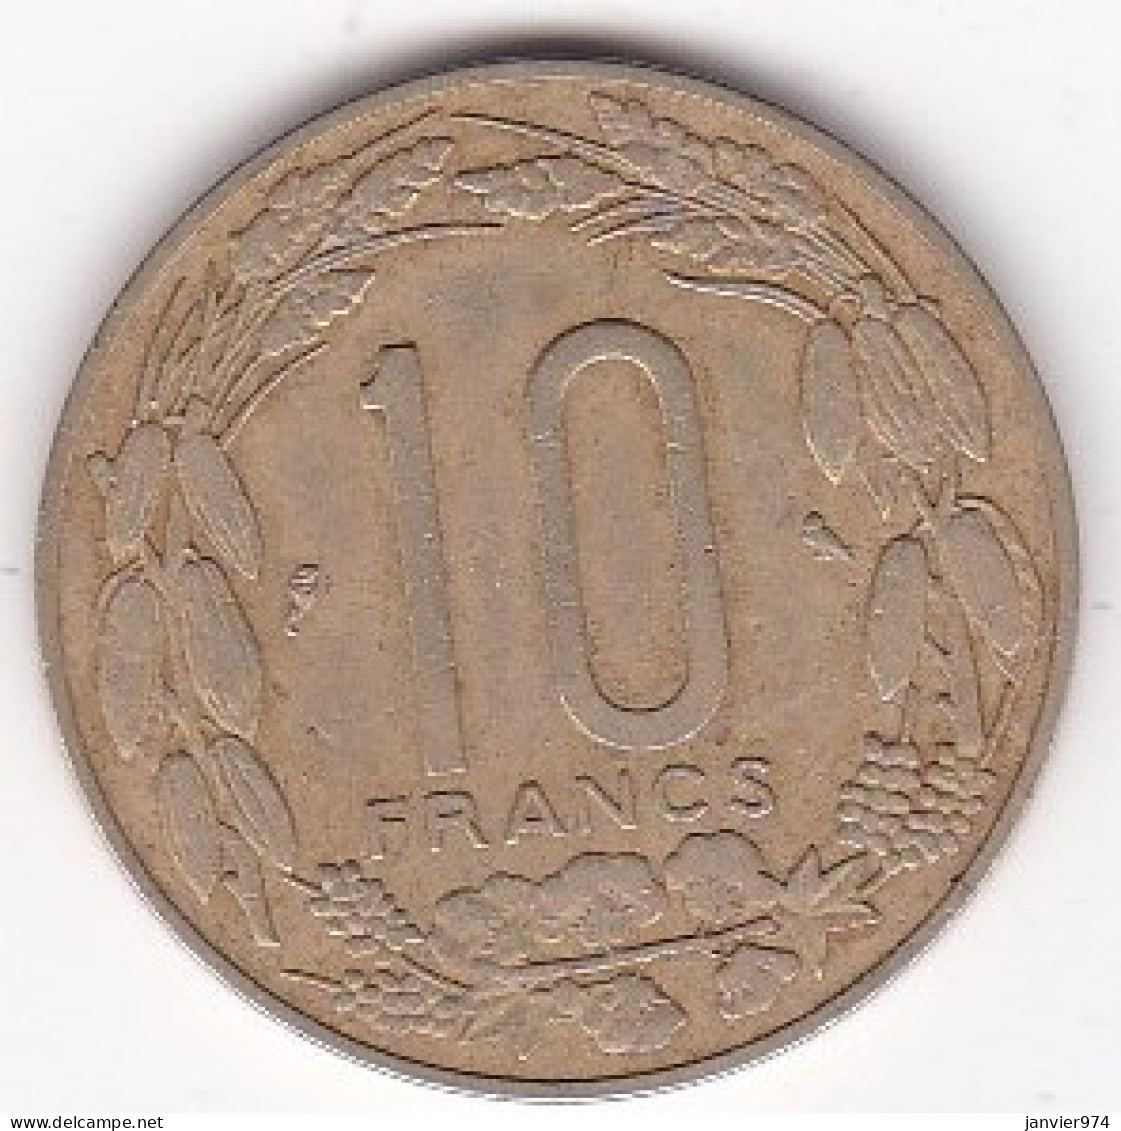 Cameroun, Afrique Equatoriale Française, 10 FRANCS 1965 Bronze Aluminium. KM# 2a - Cameroon